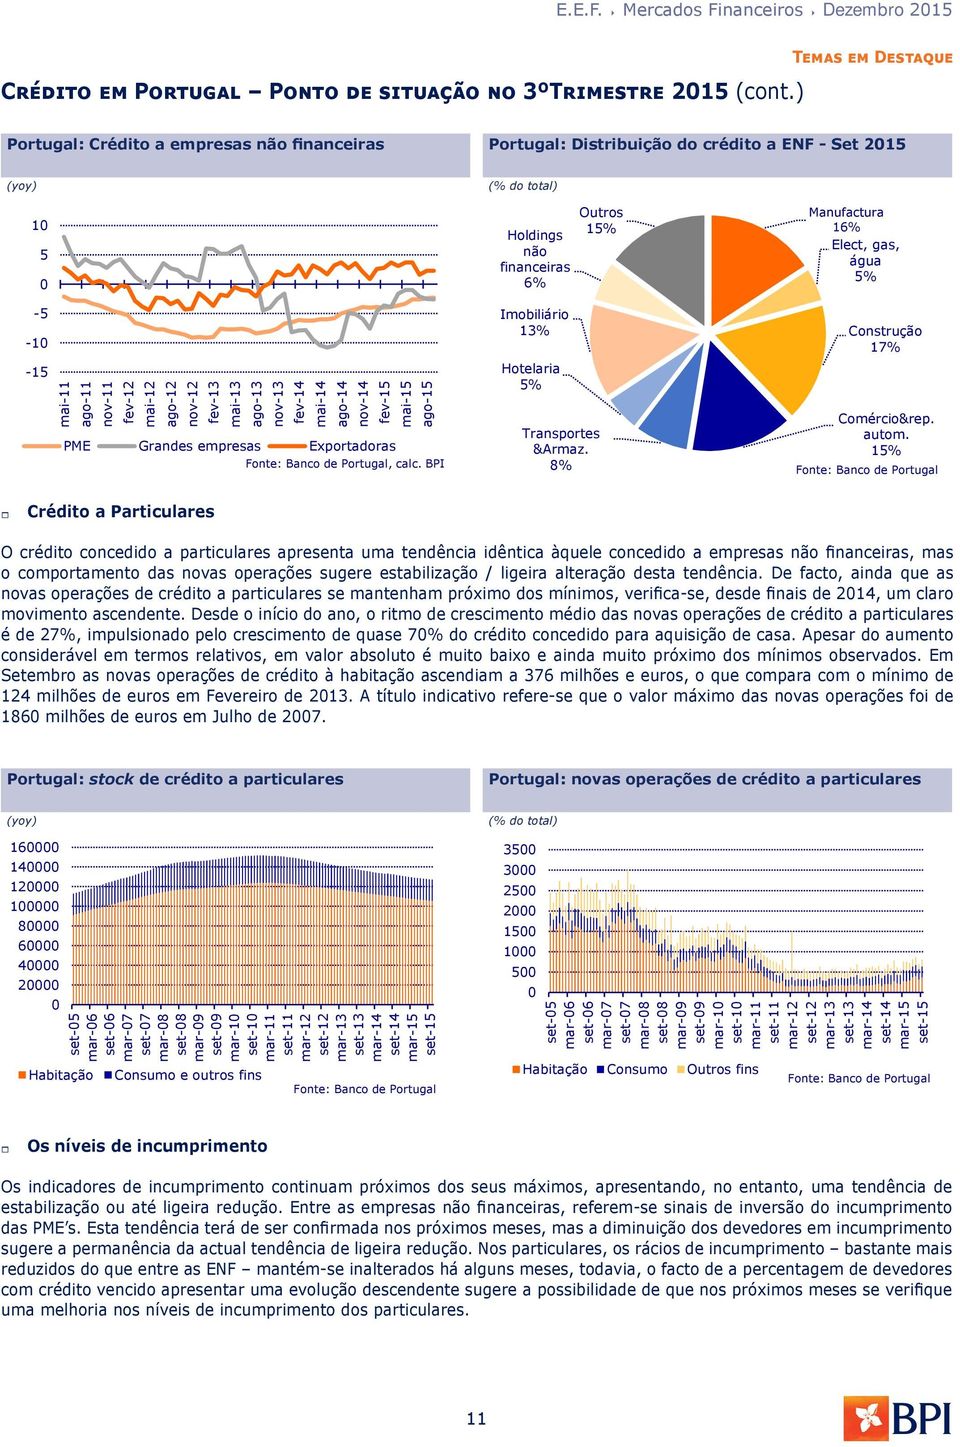 fev-13 mai-13 ago-13 PME Grandes empresas Exportadoras Fonte: Banco de Portugal, calc.